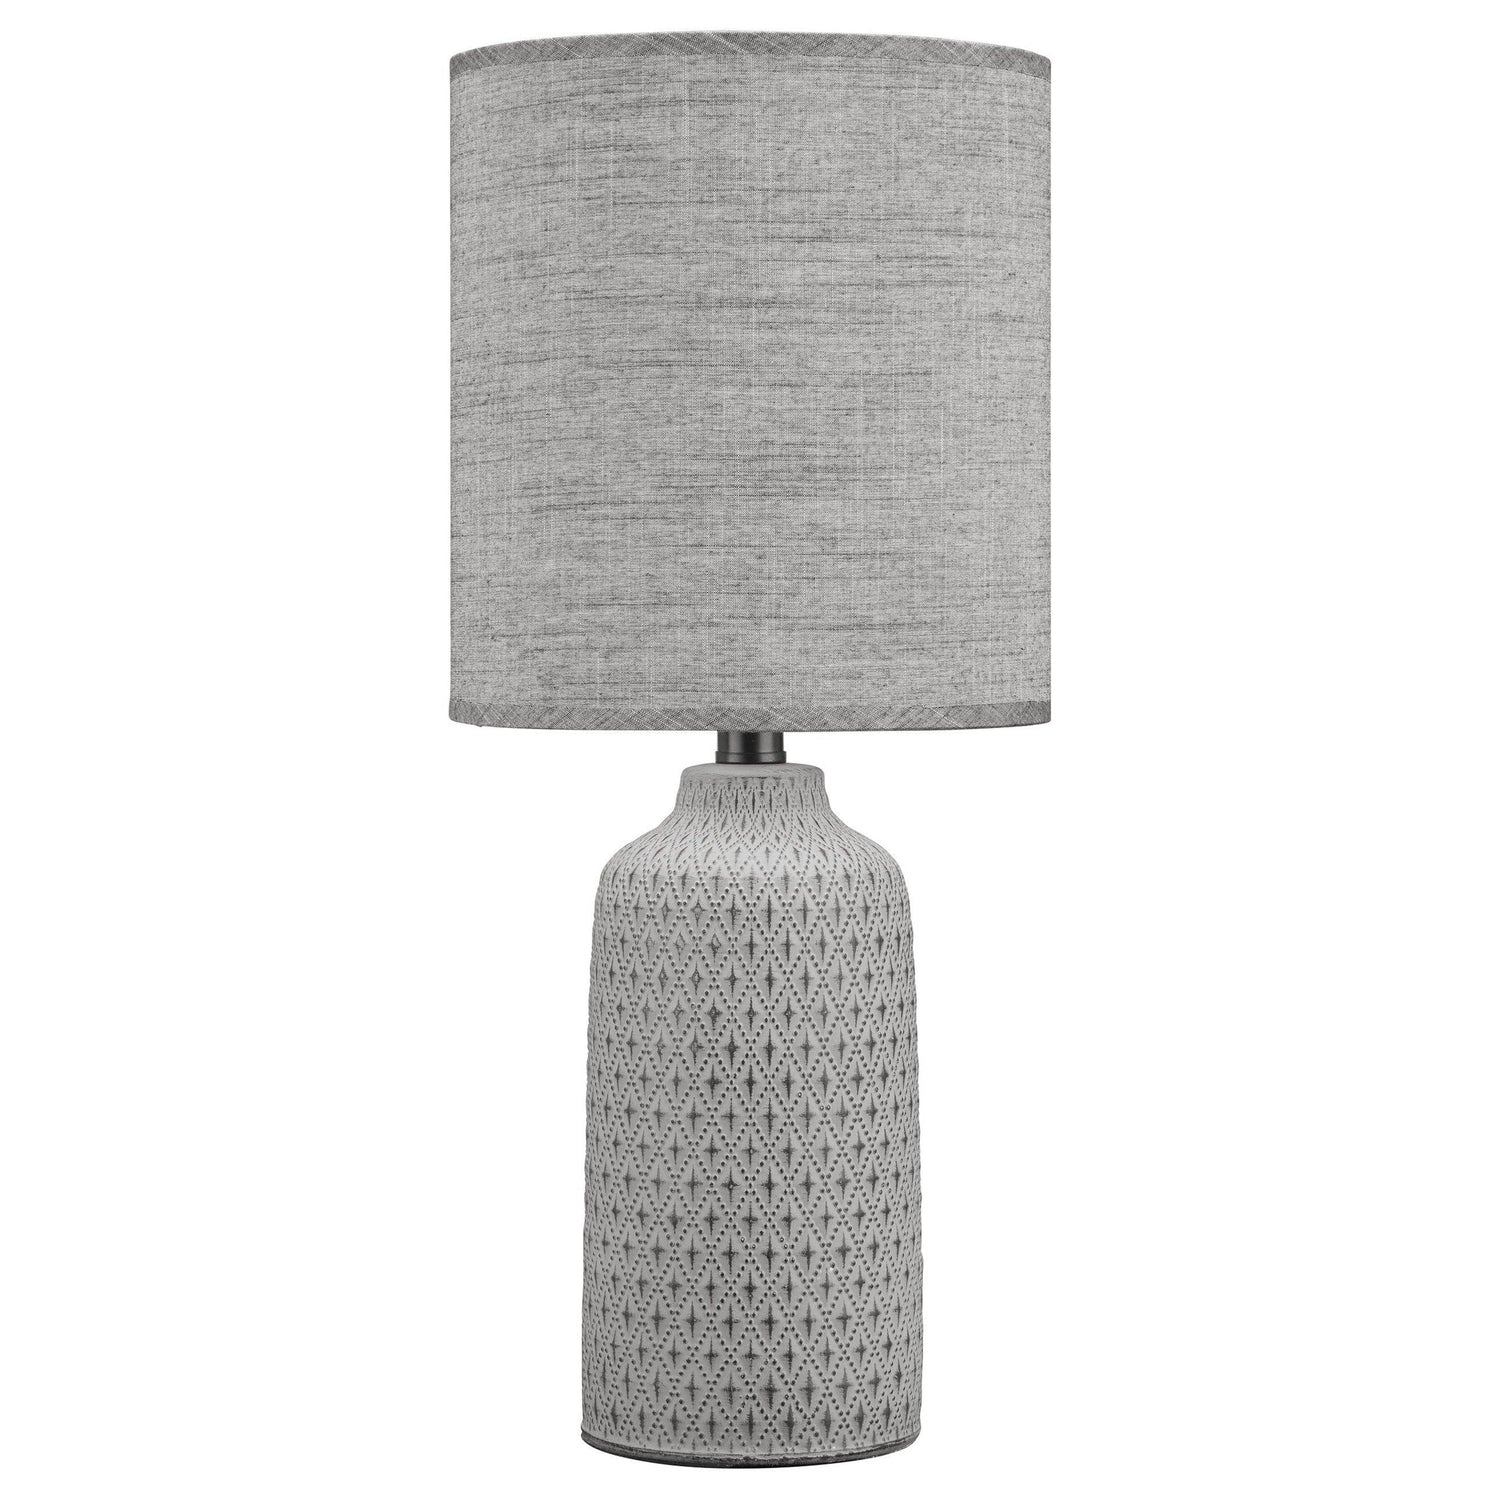 Donnford Table Lamp Ash-L180134